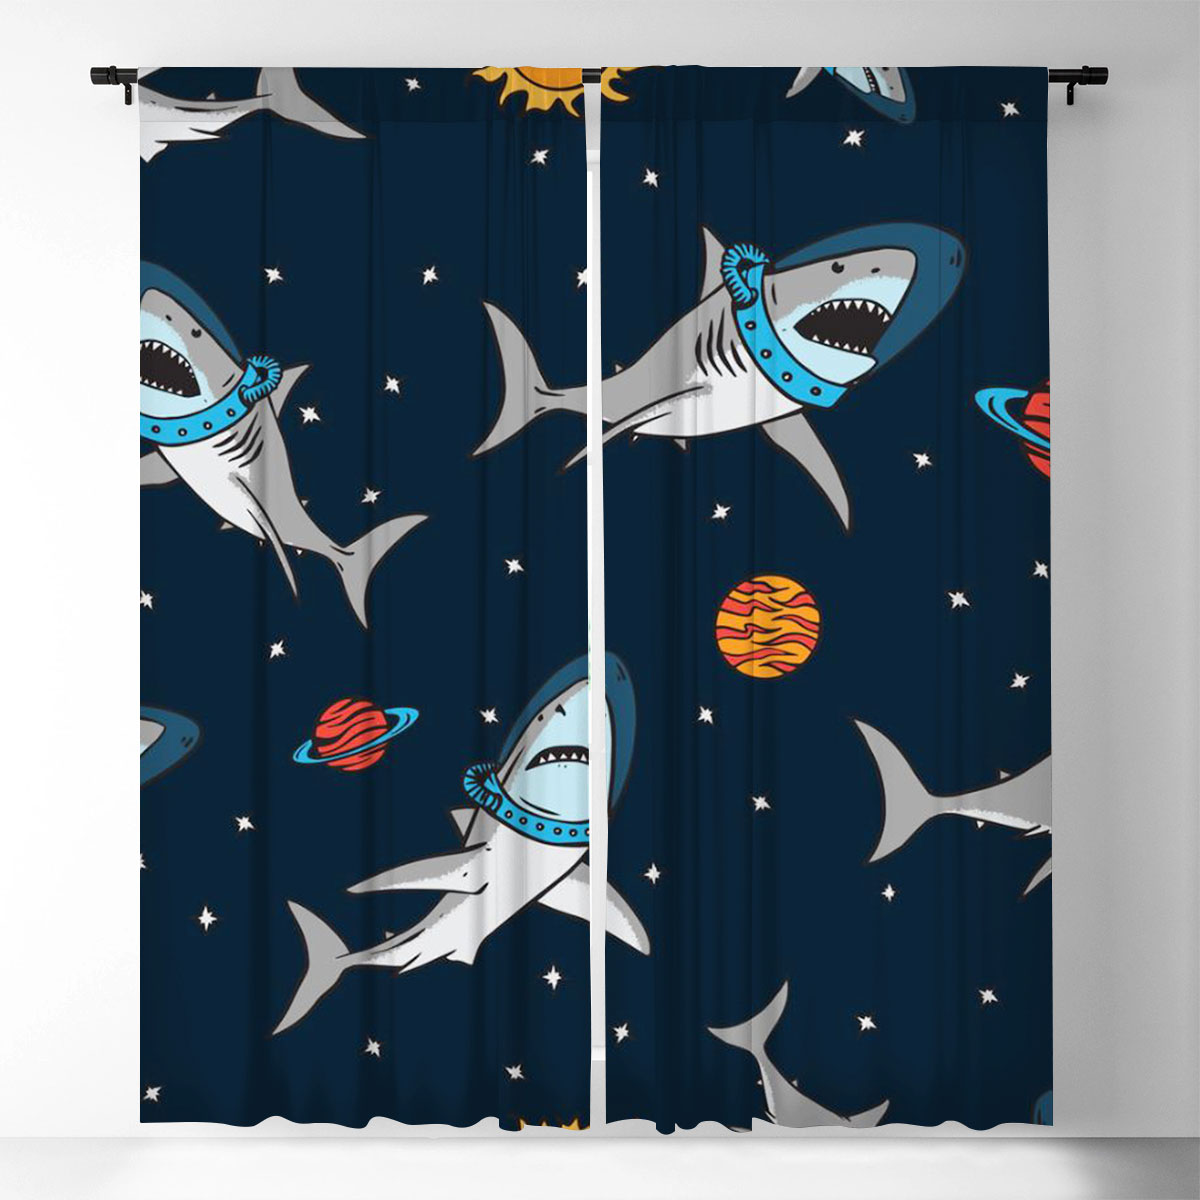 Astronaut Great White Shark Window Curtain